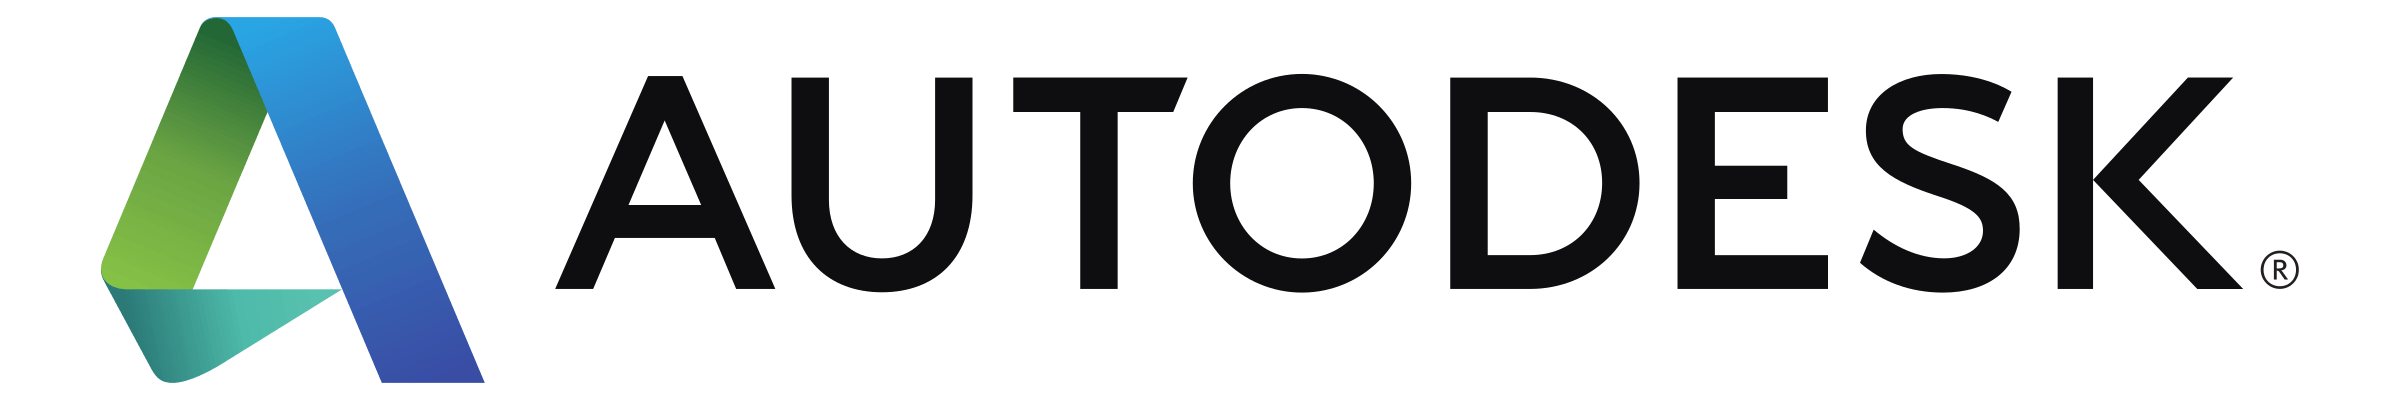 autodesk-logo-transparent